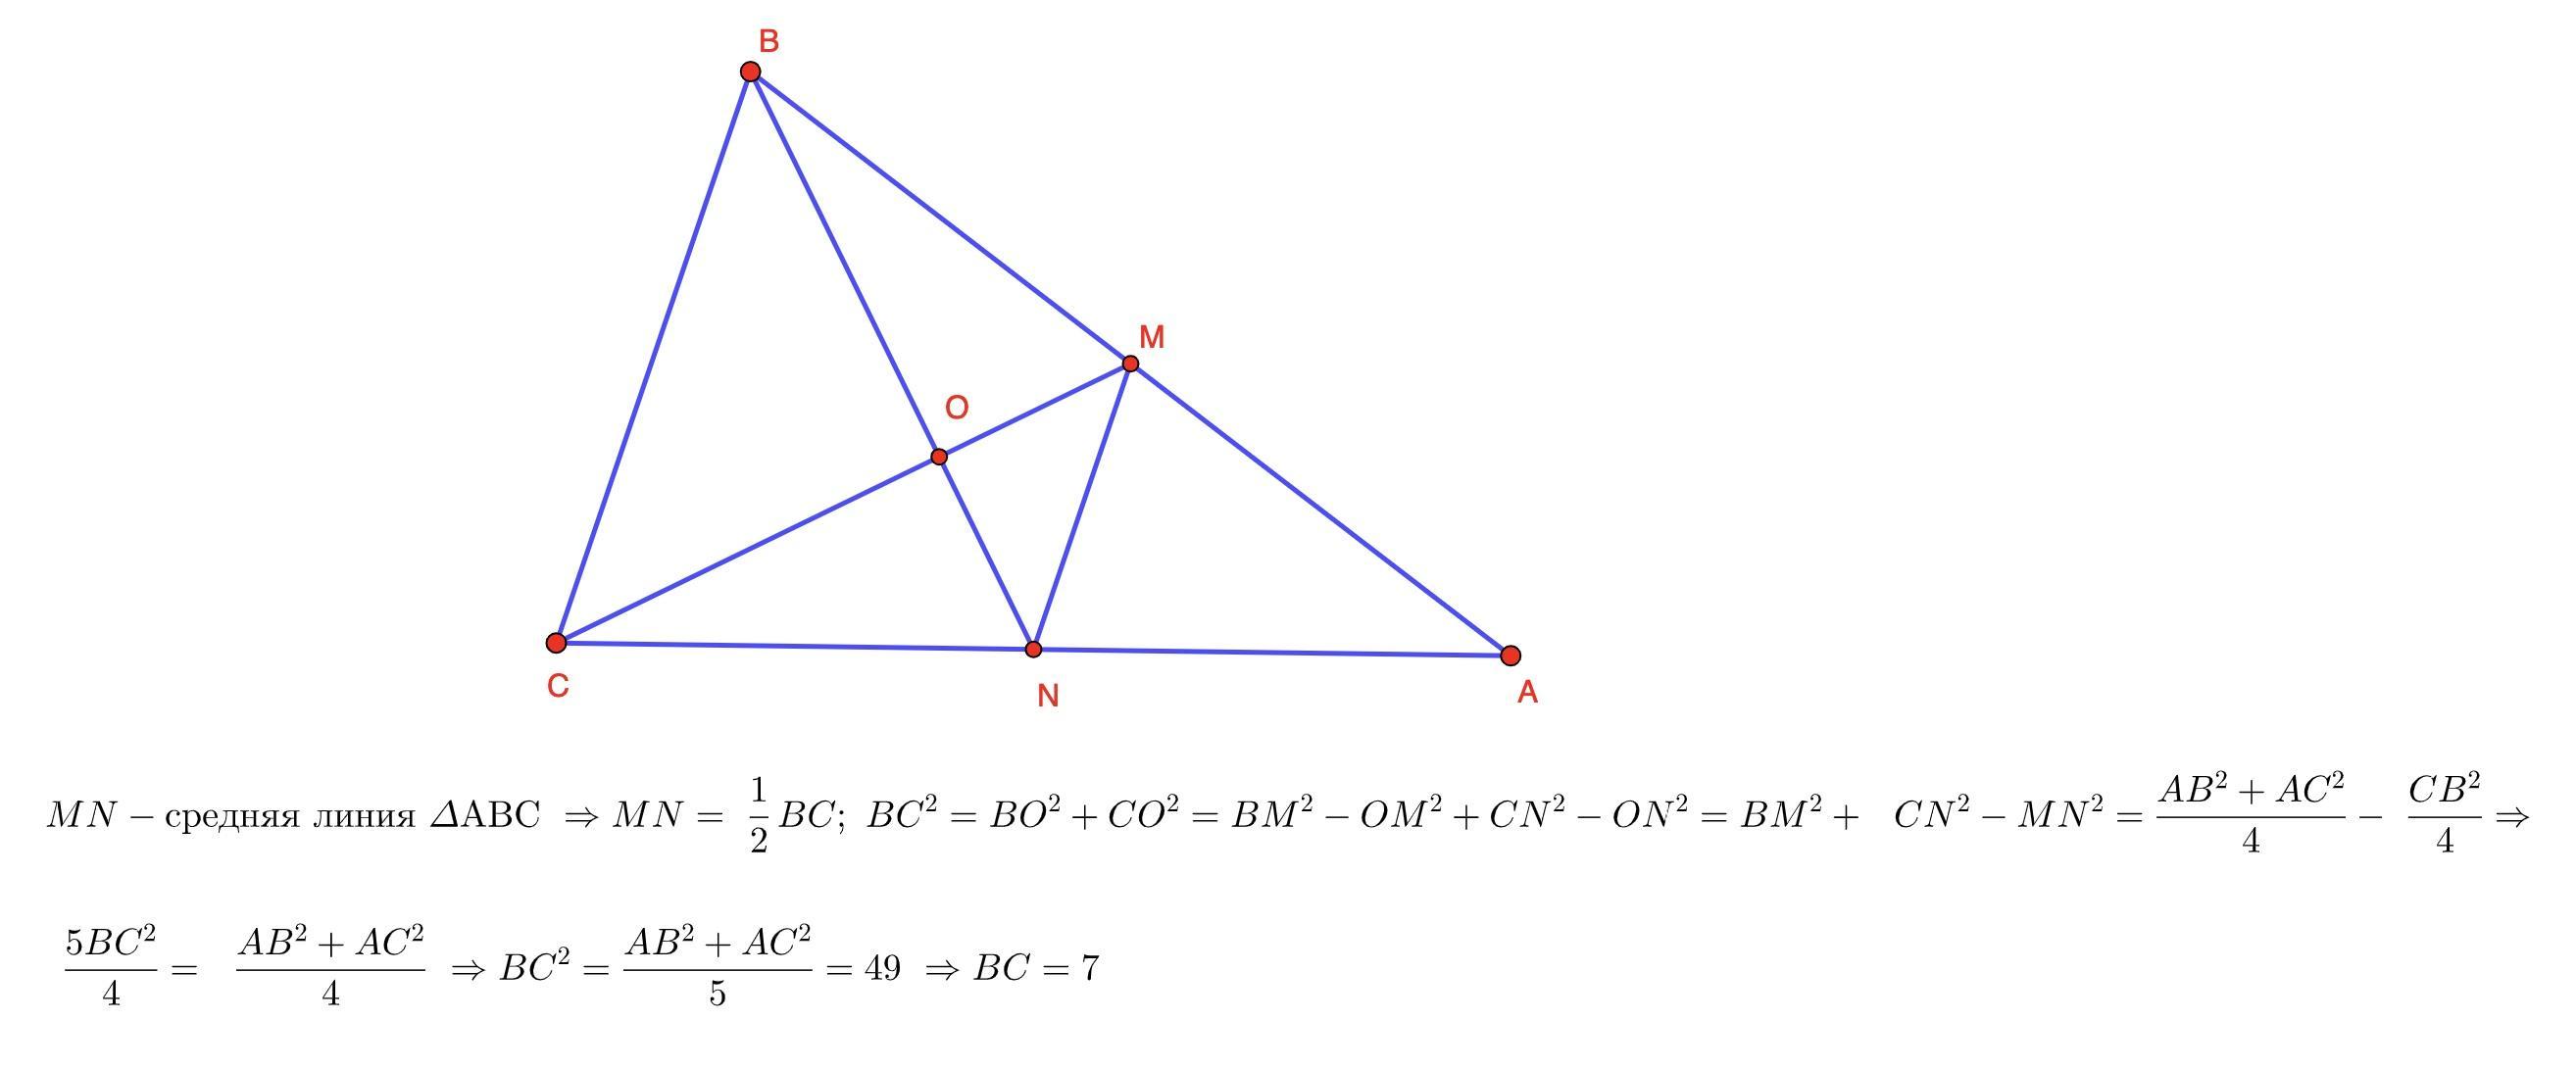 На стороне BC треугольника ABC выбрана точка d. Рисунок треугольника АВС С медианой ВМ. В треугольнике ABC BM Медиана и BH высота. BM перпендикулярно BC BM перпендикулярно ab.